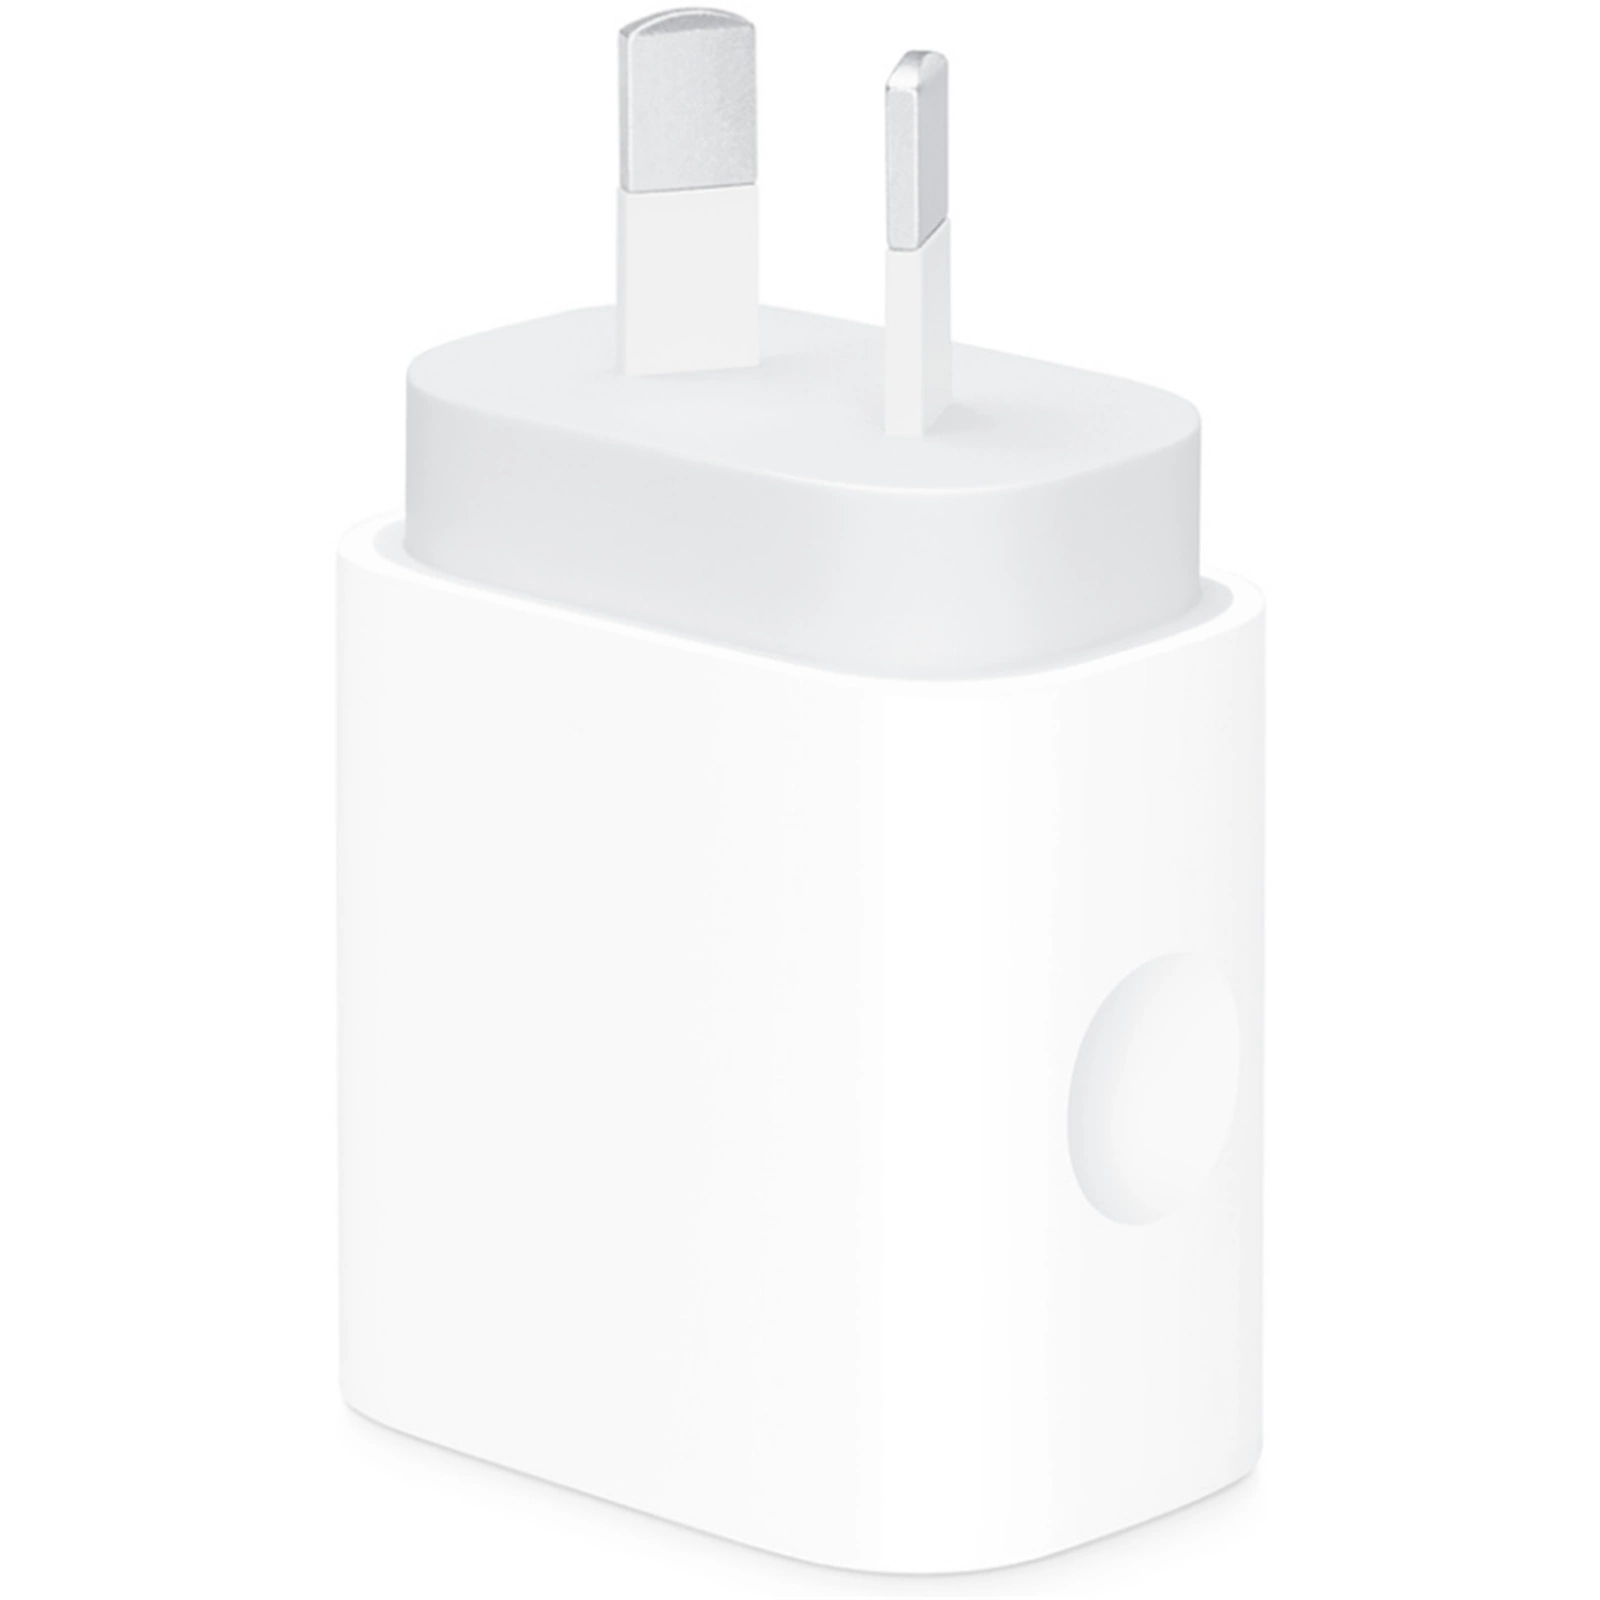 Apple USB C Power Adapter